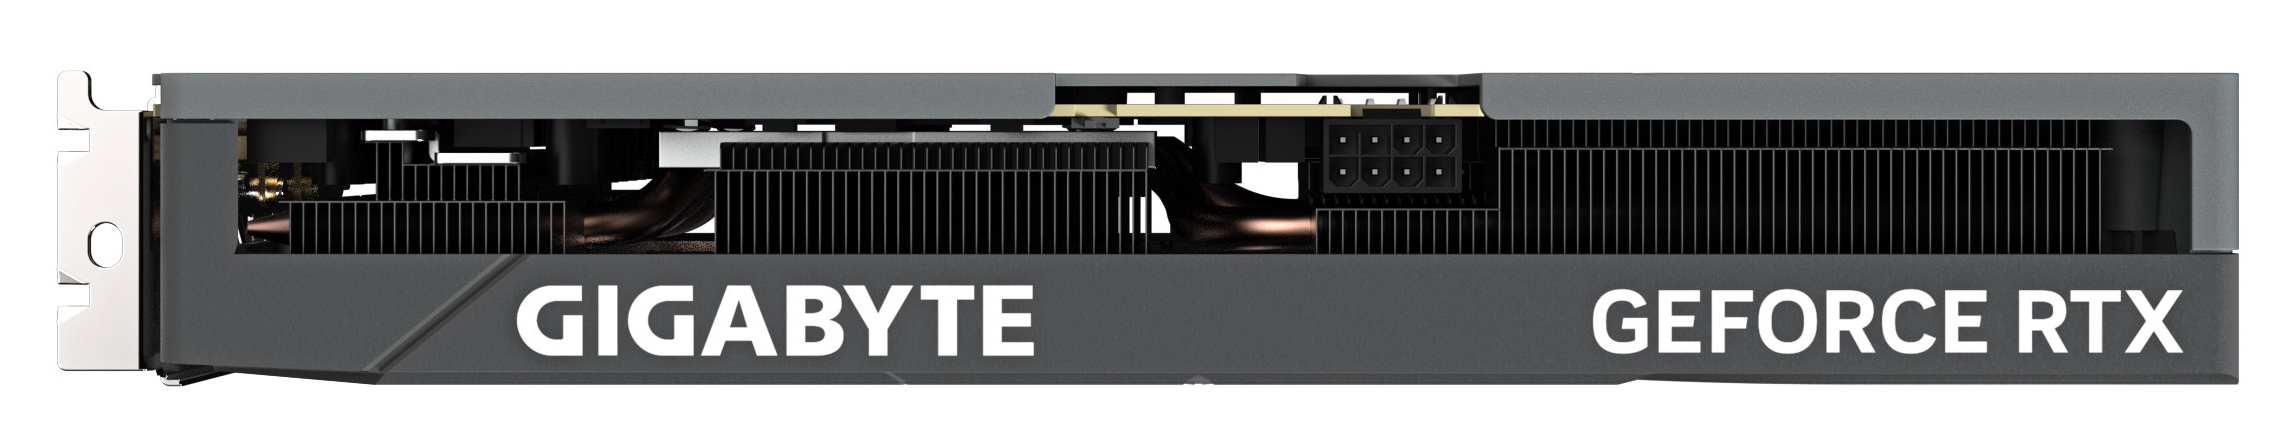 Gigabyte - Tarjeta Gráfica Gigabyte GeForce® RTX 4060 Ti Eagle OC 8GB GD6 DLSS3